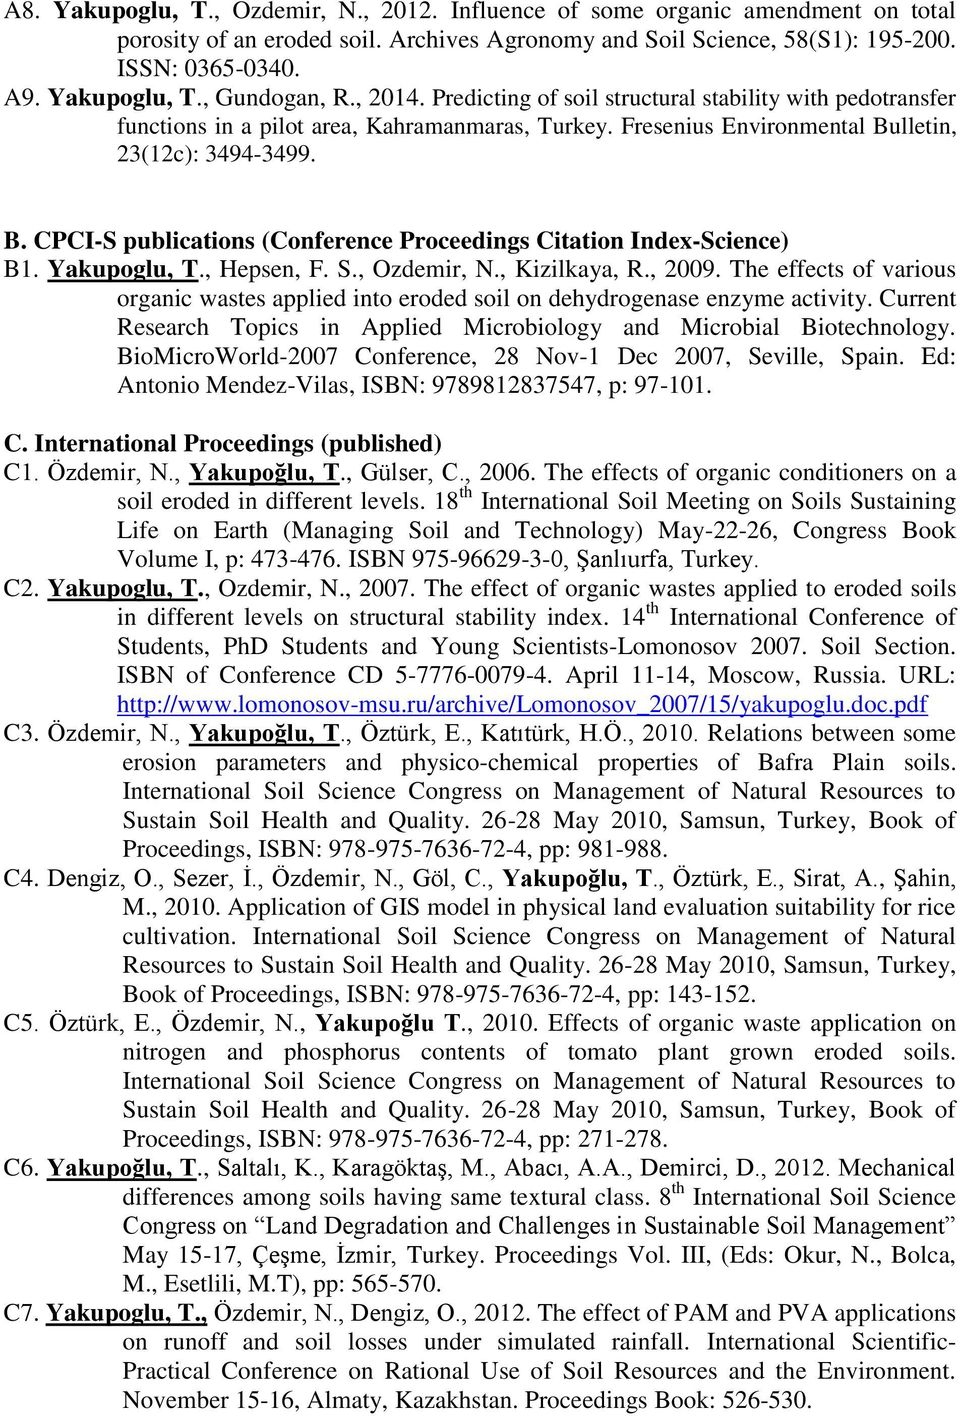 lletin, 23(12c): 3494-3499. B. CPCI-S publications (Conference Proceedings Citation Index-Science) B1. Yakupoglu, T., Hepsen, F. S., Ozdemir, N., Kizilkaya, R., 2009.